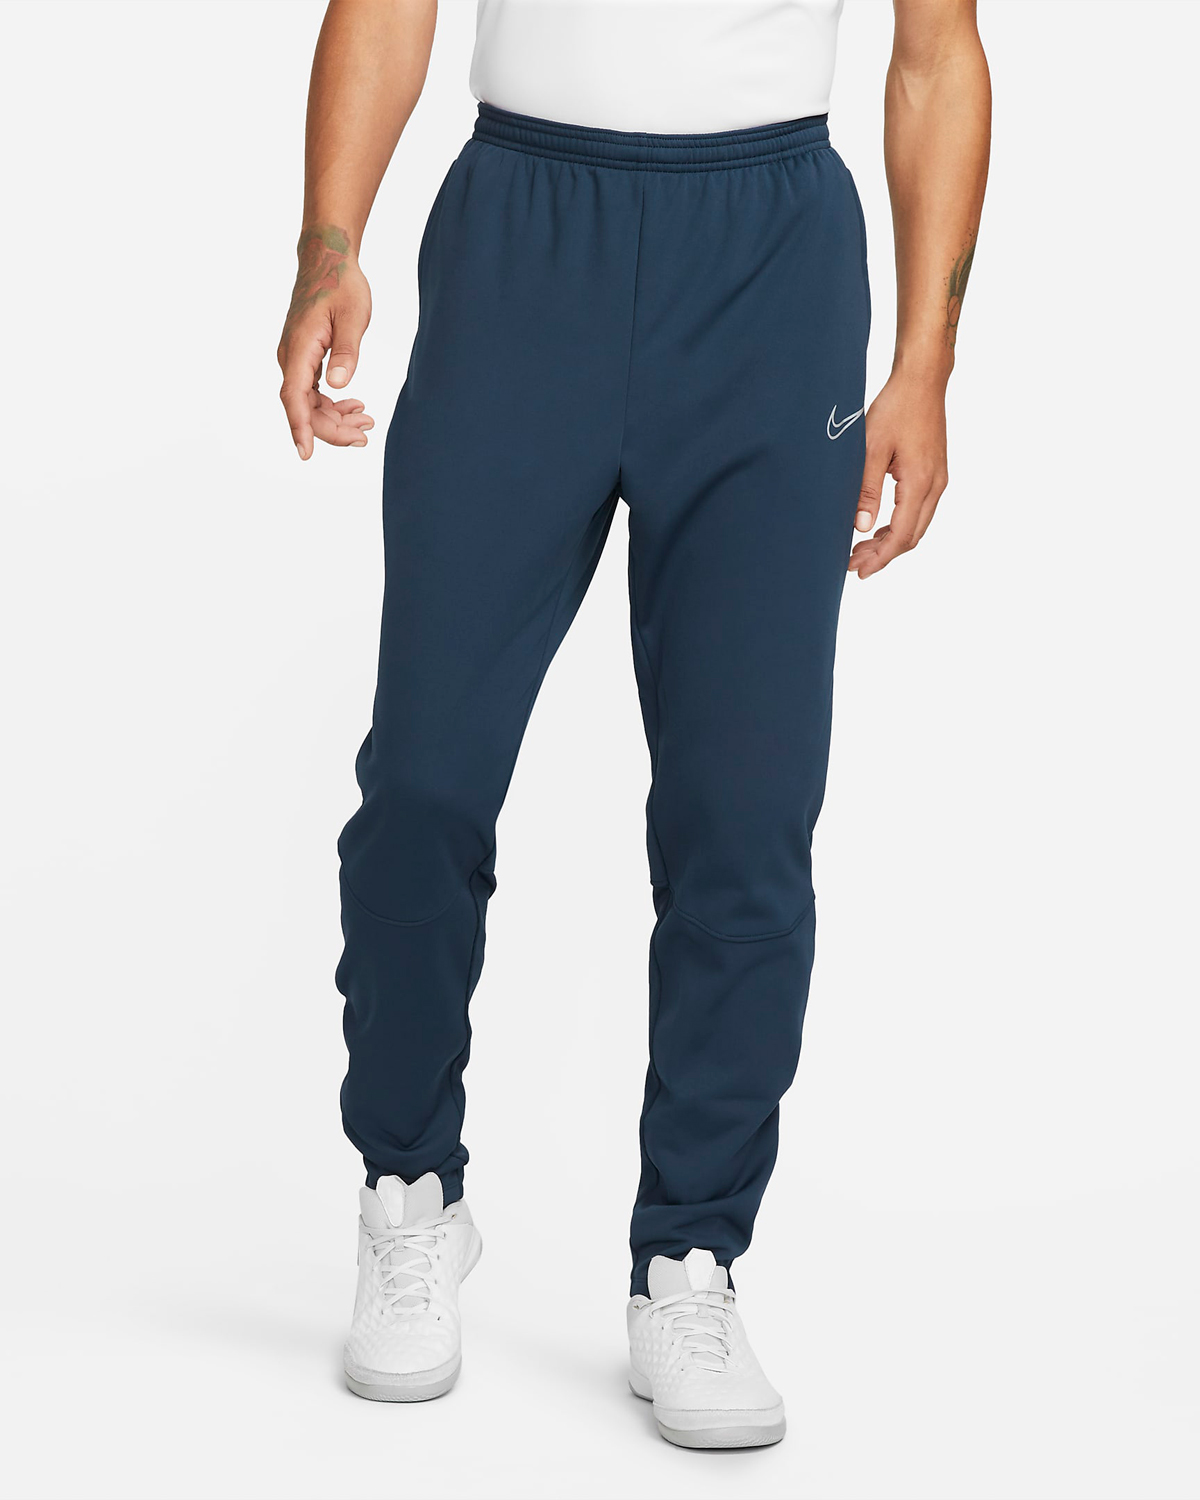 Nike-Pants-Armory-Navy